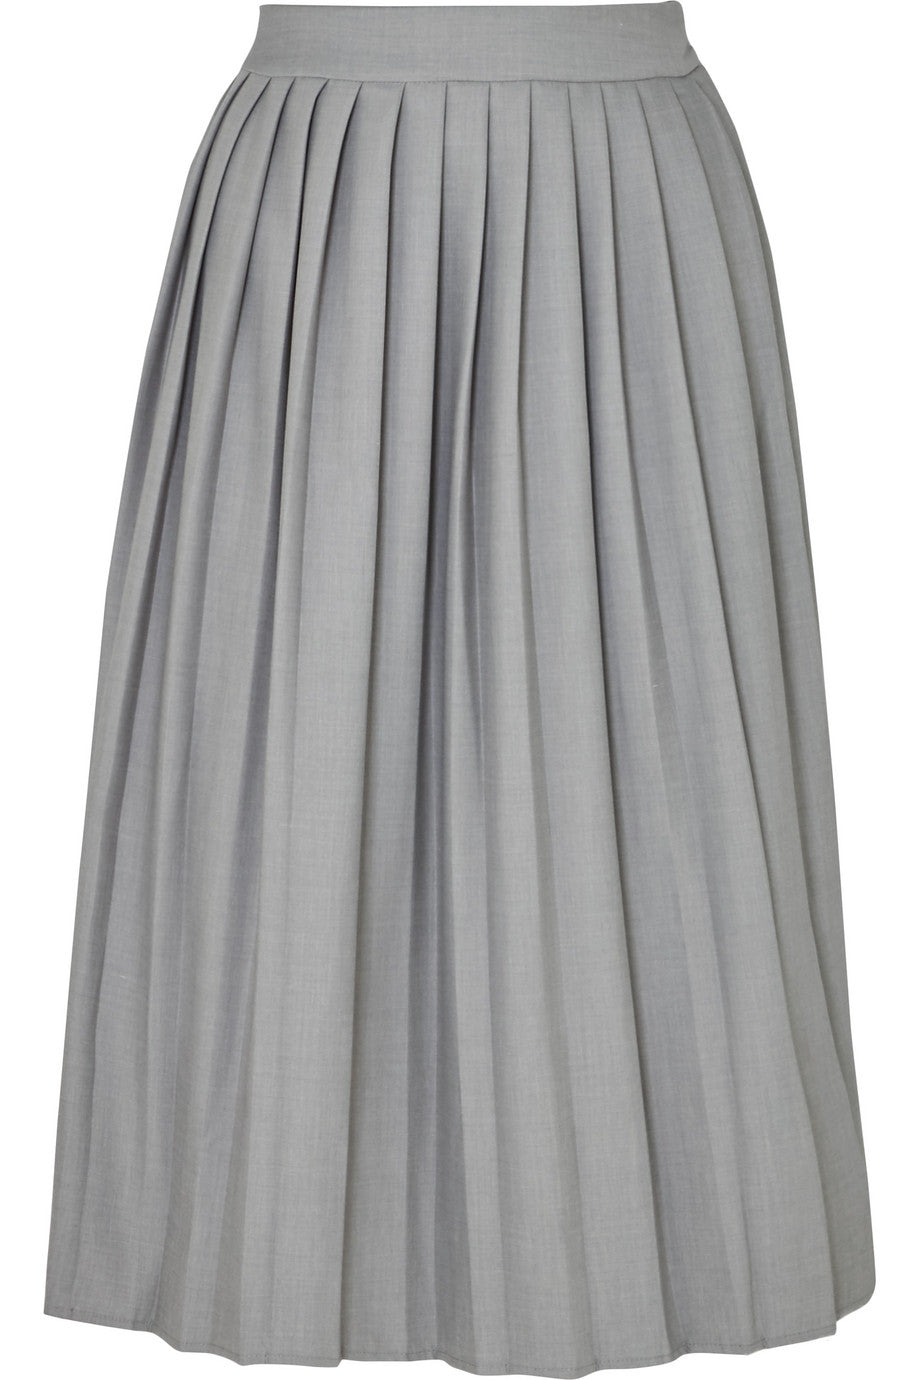 Georgia Alice - grey gray 'Bobby' pleated woven midi-skirt